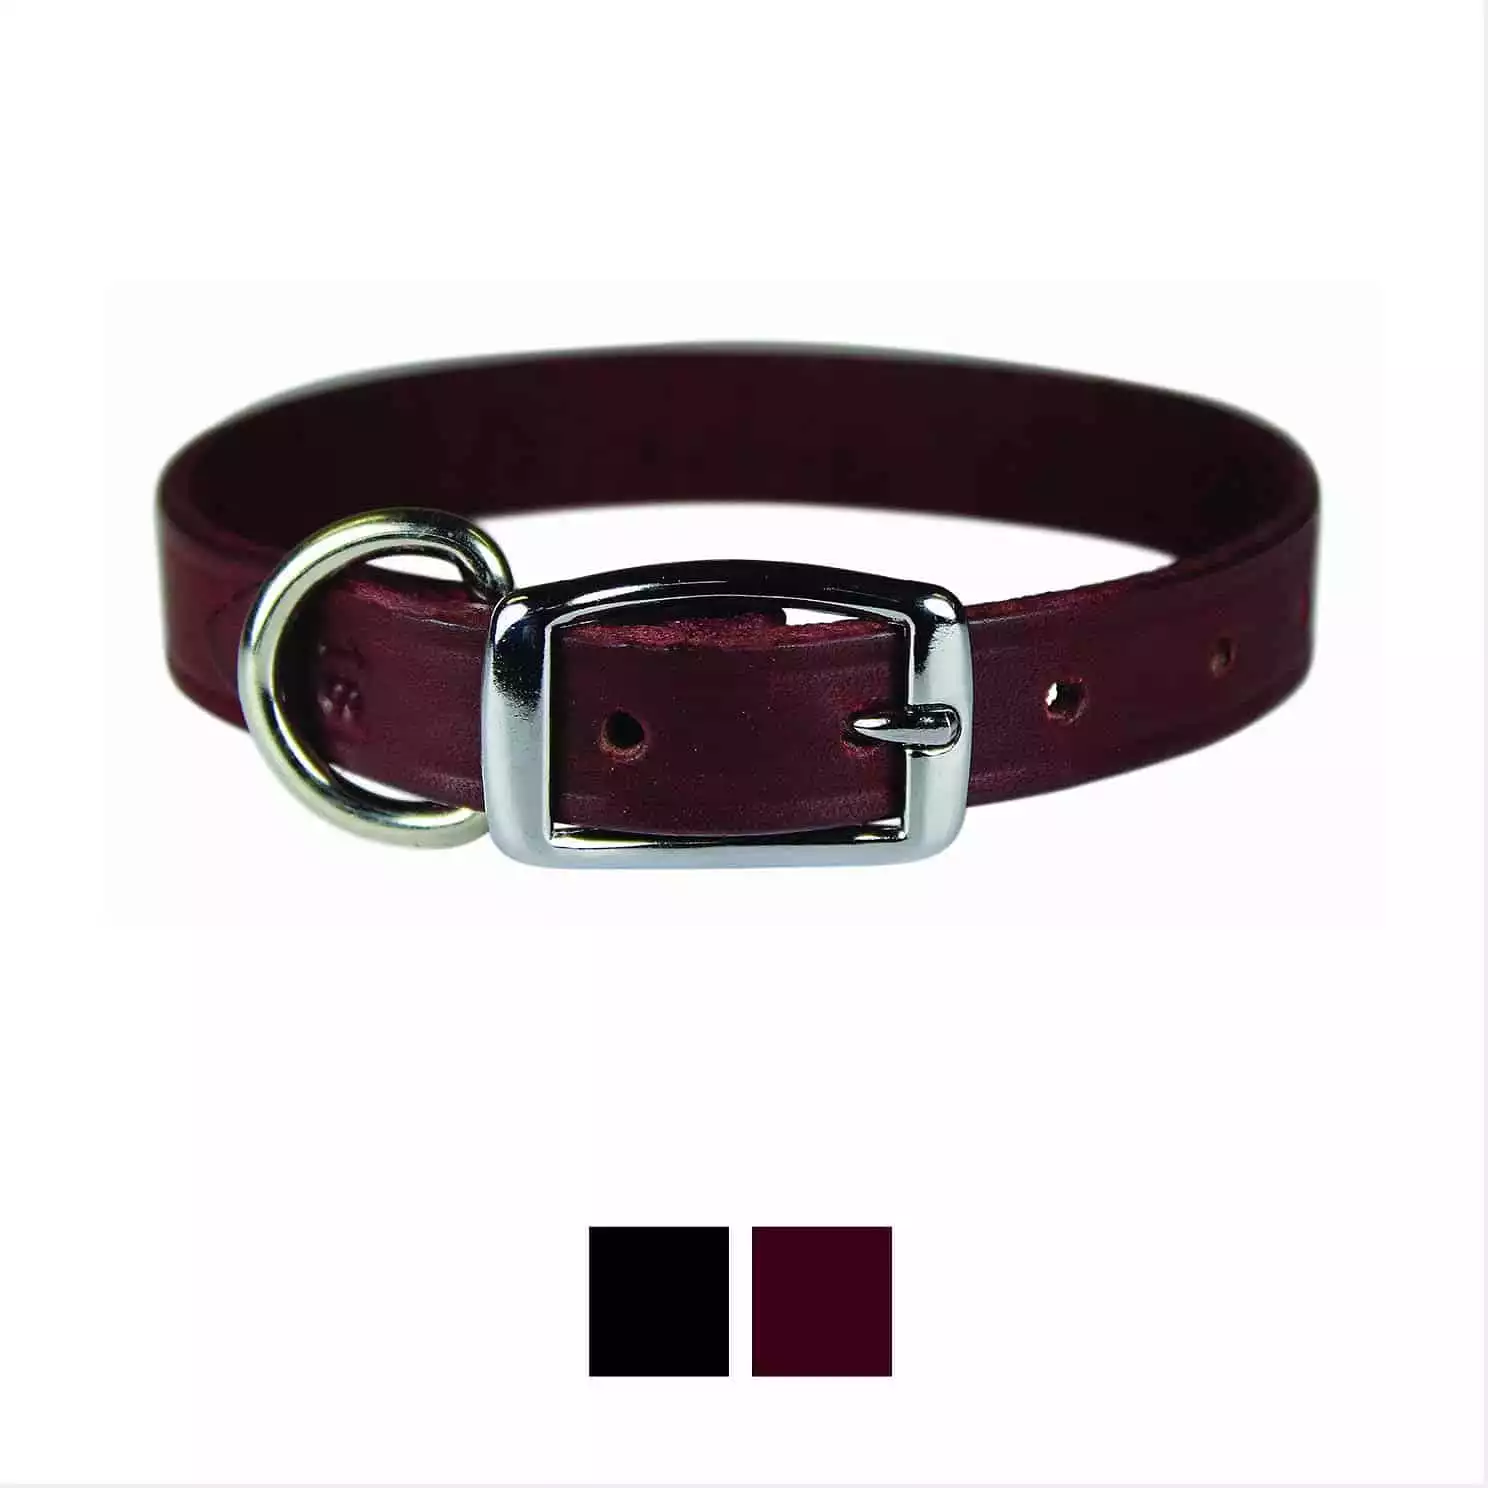 OmniPet Leather Dog Collar